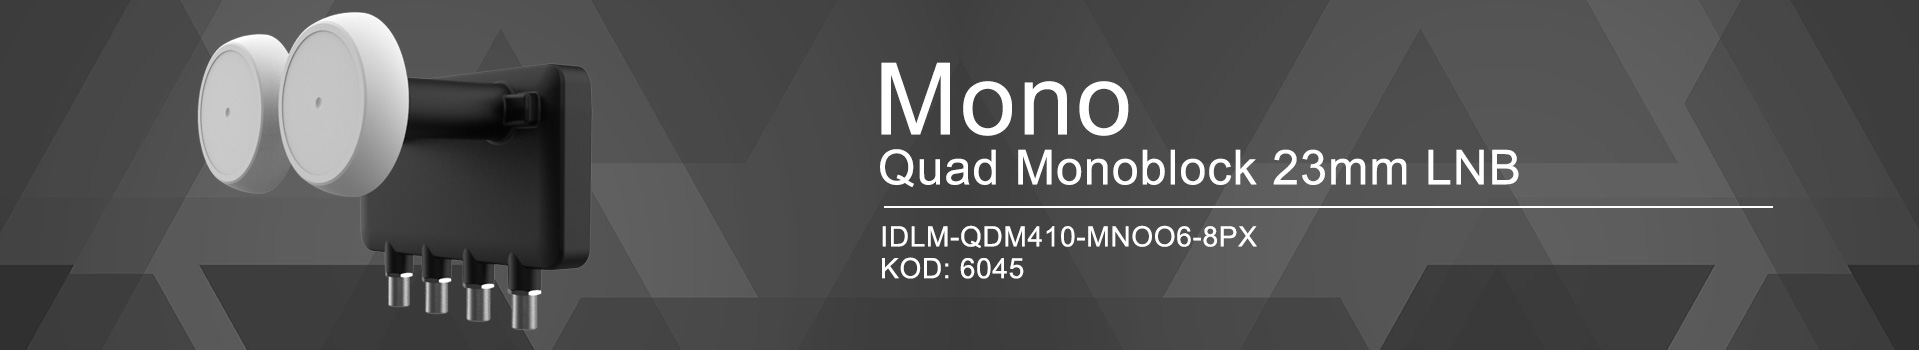 konwerter satelitarny Inverto Quad Mono IDLM-QDM410-MNOO6-8PX